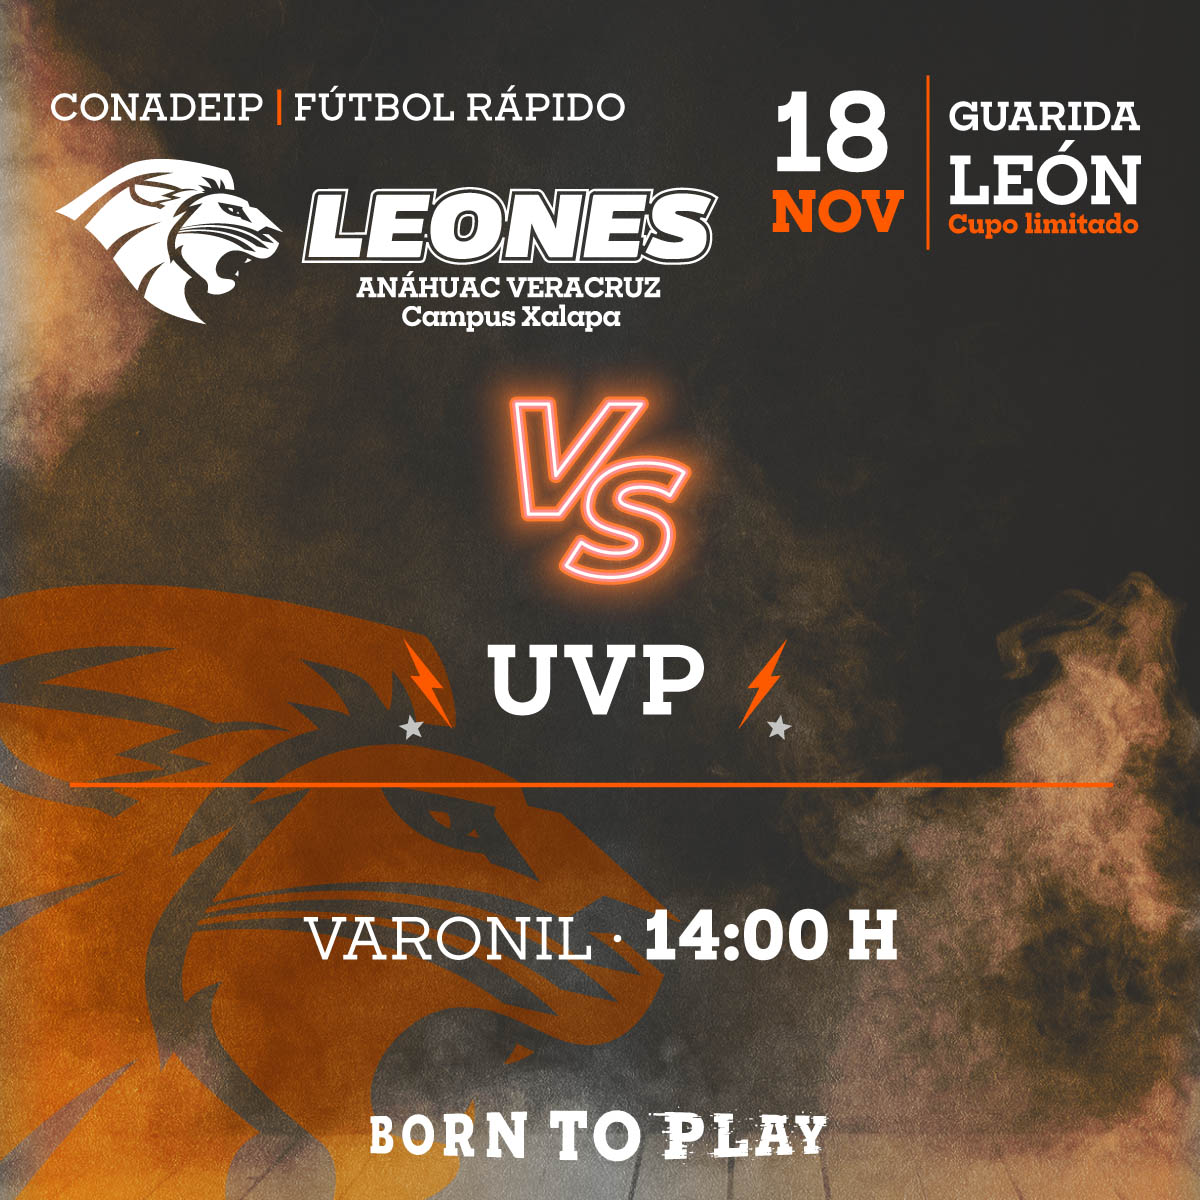 Fútbol Rápido Varonil: Leones vs UVP